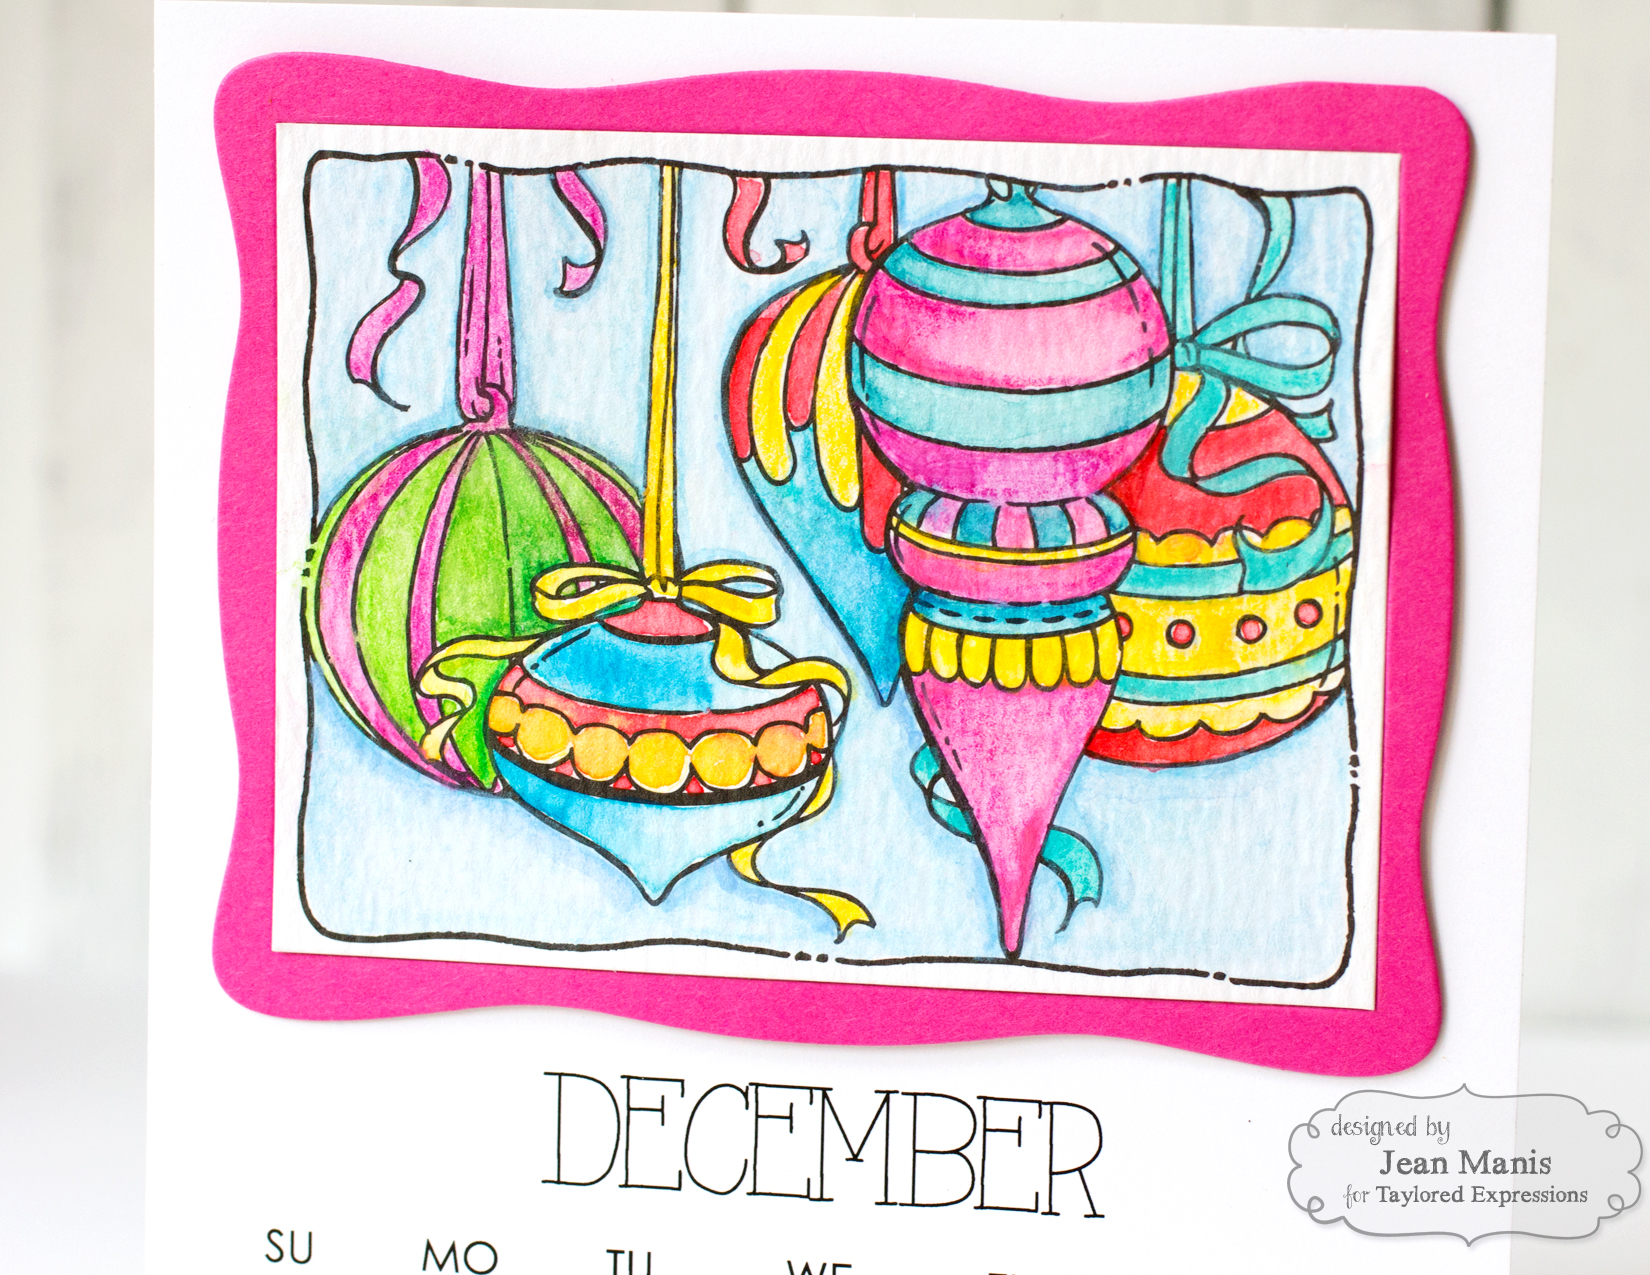 TE Watercolored Calendar Page